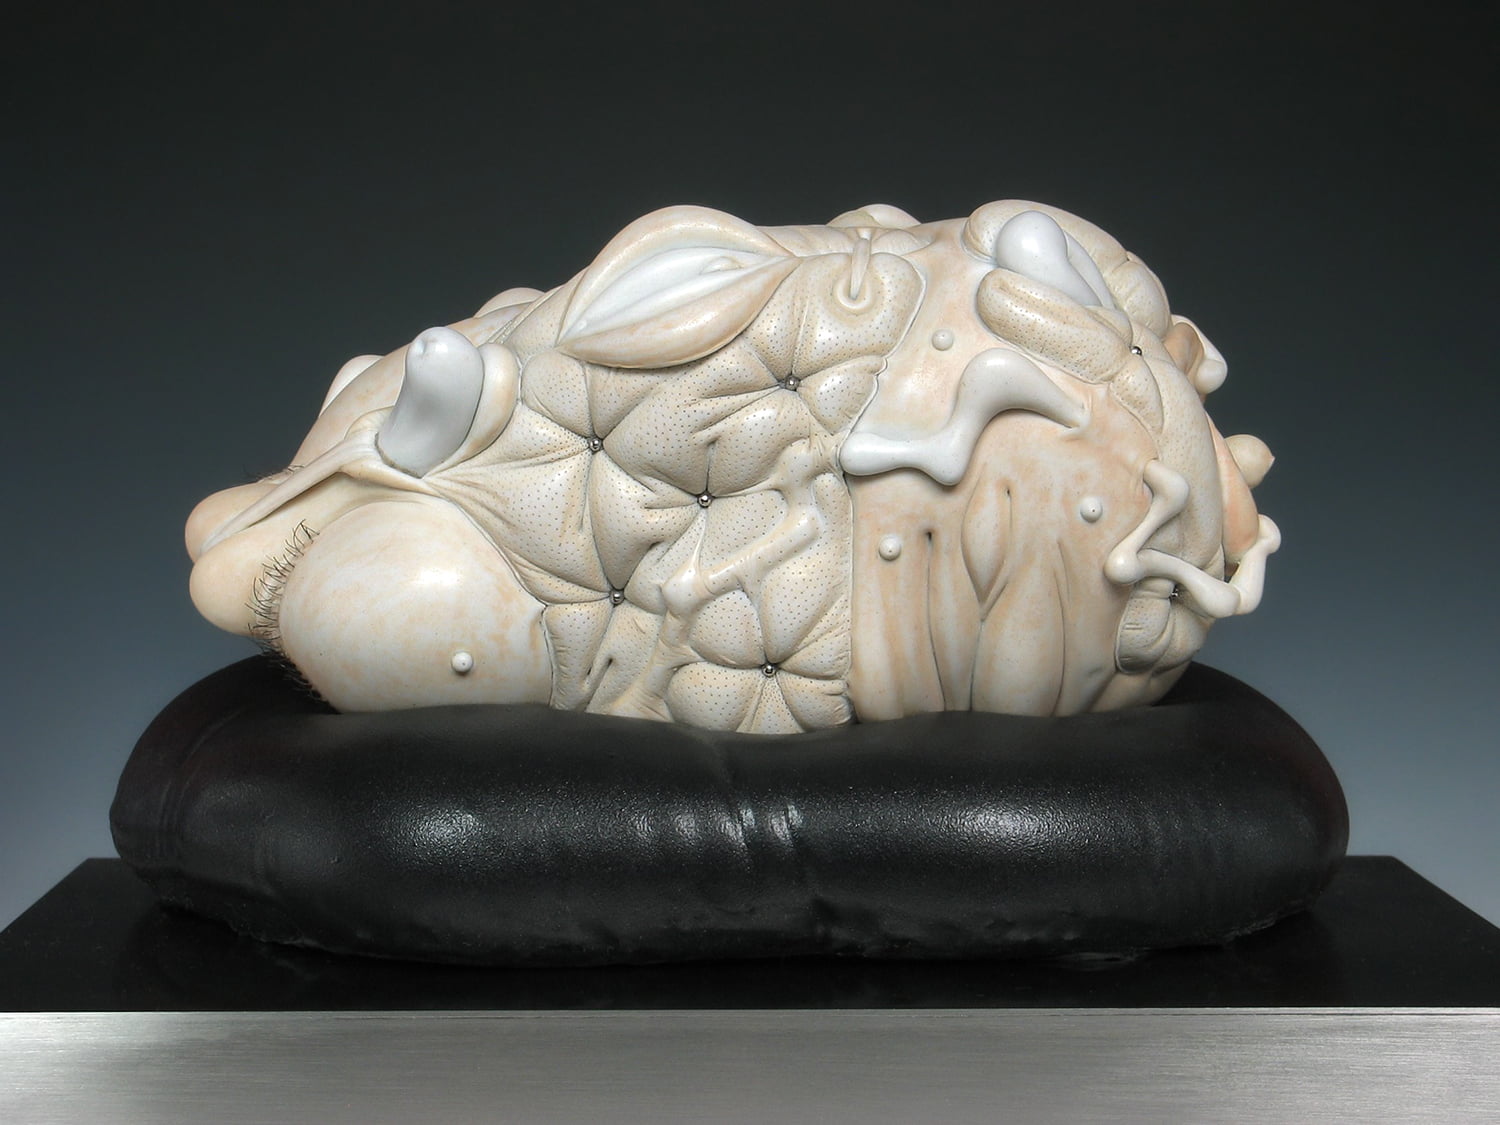 Jason Briggs "Cinch" (alternate view). Porcelain, hair, and mixed media sculptural ceramic art.